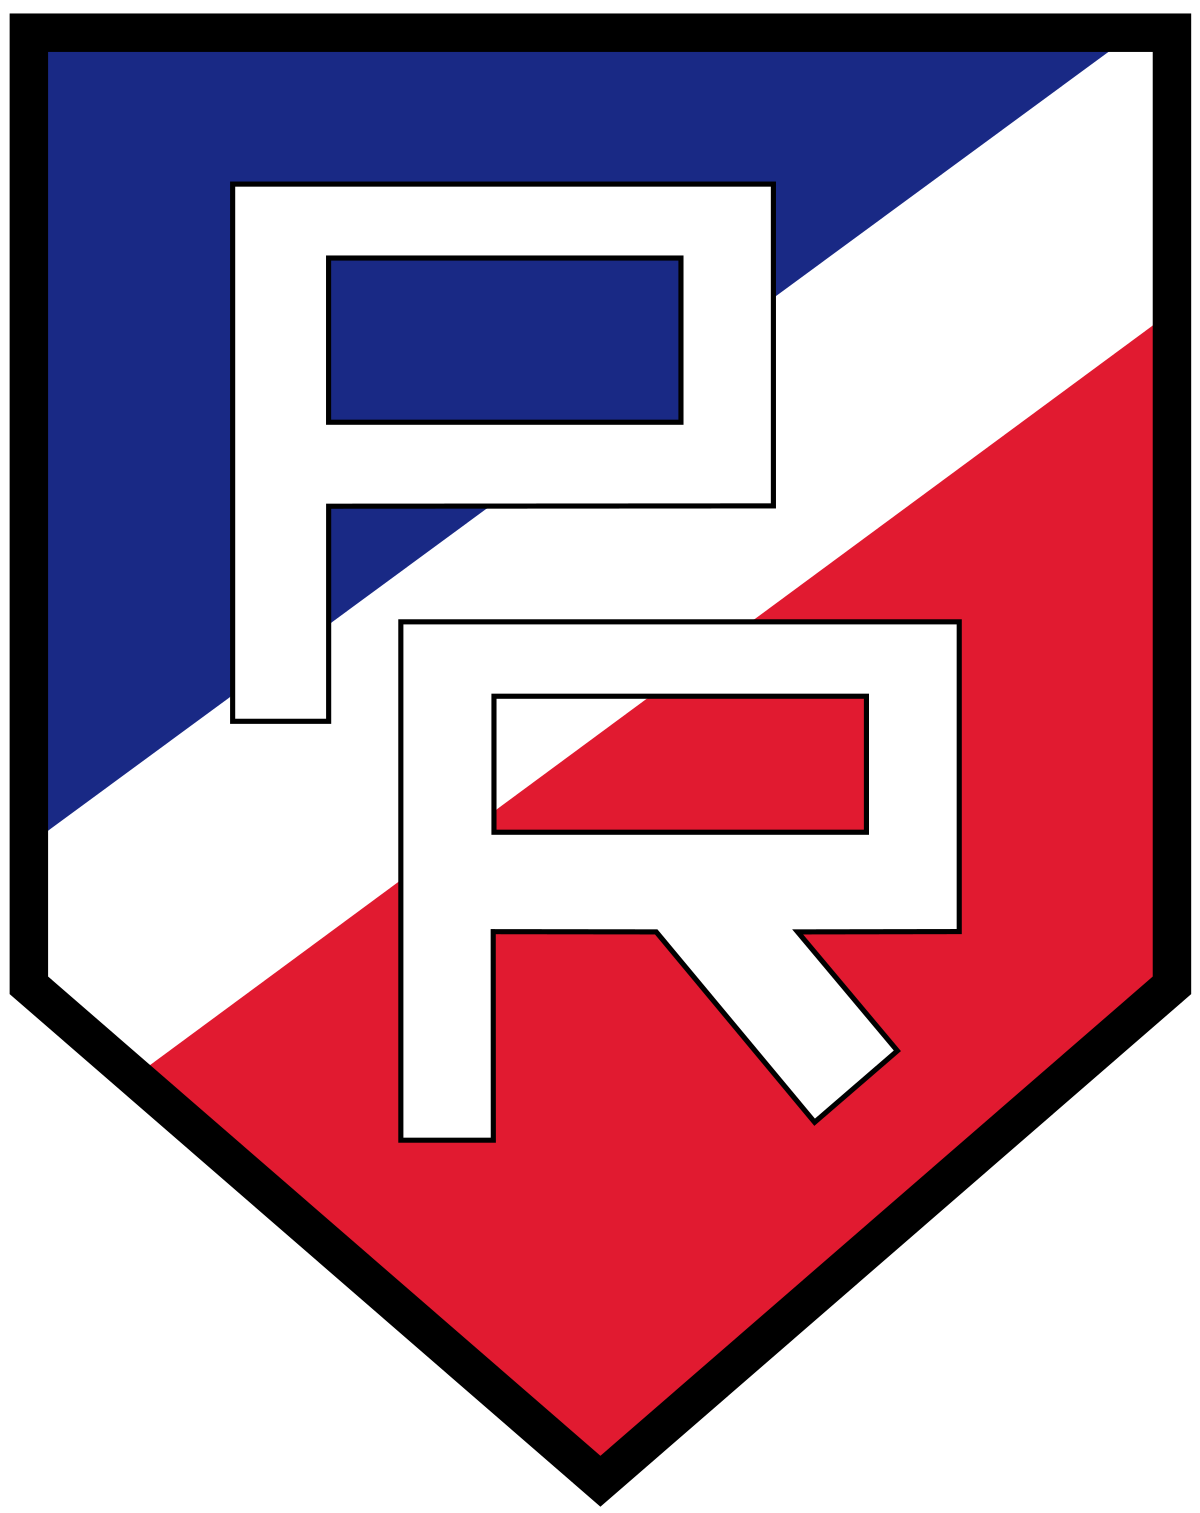 Christian Democratic Party (Chile) - Wikipedia